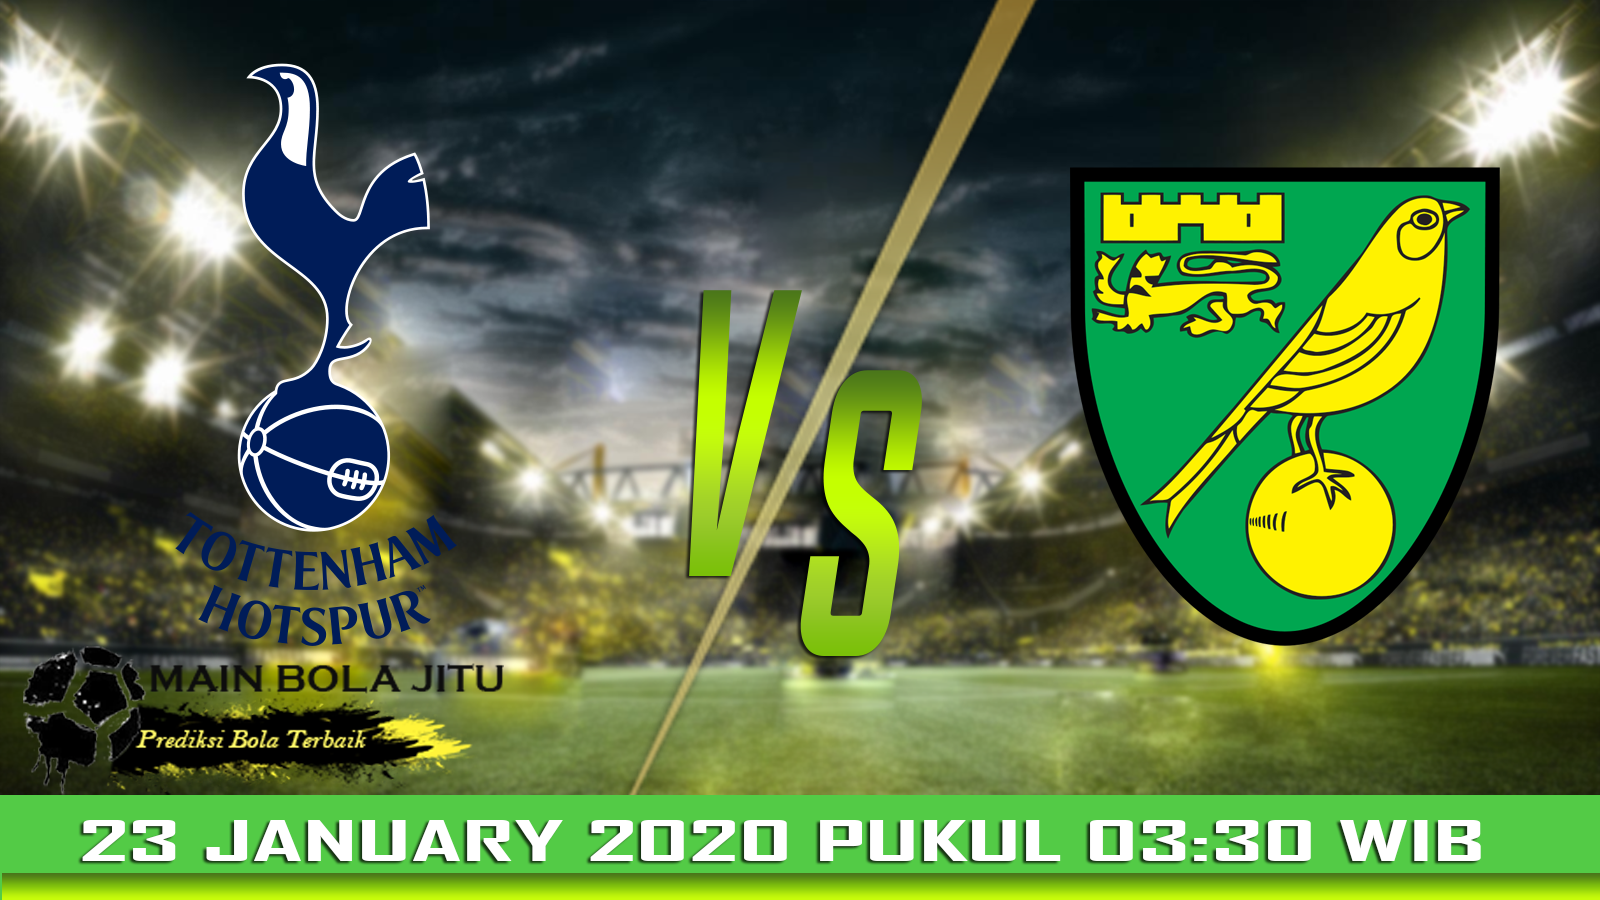 Prediksi Bola Tottenham Hotspur vs Norwich tanggal 23-01-2020